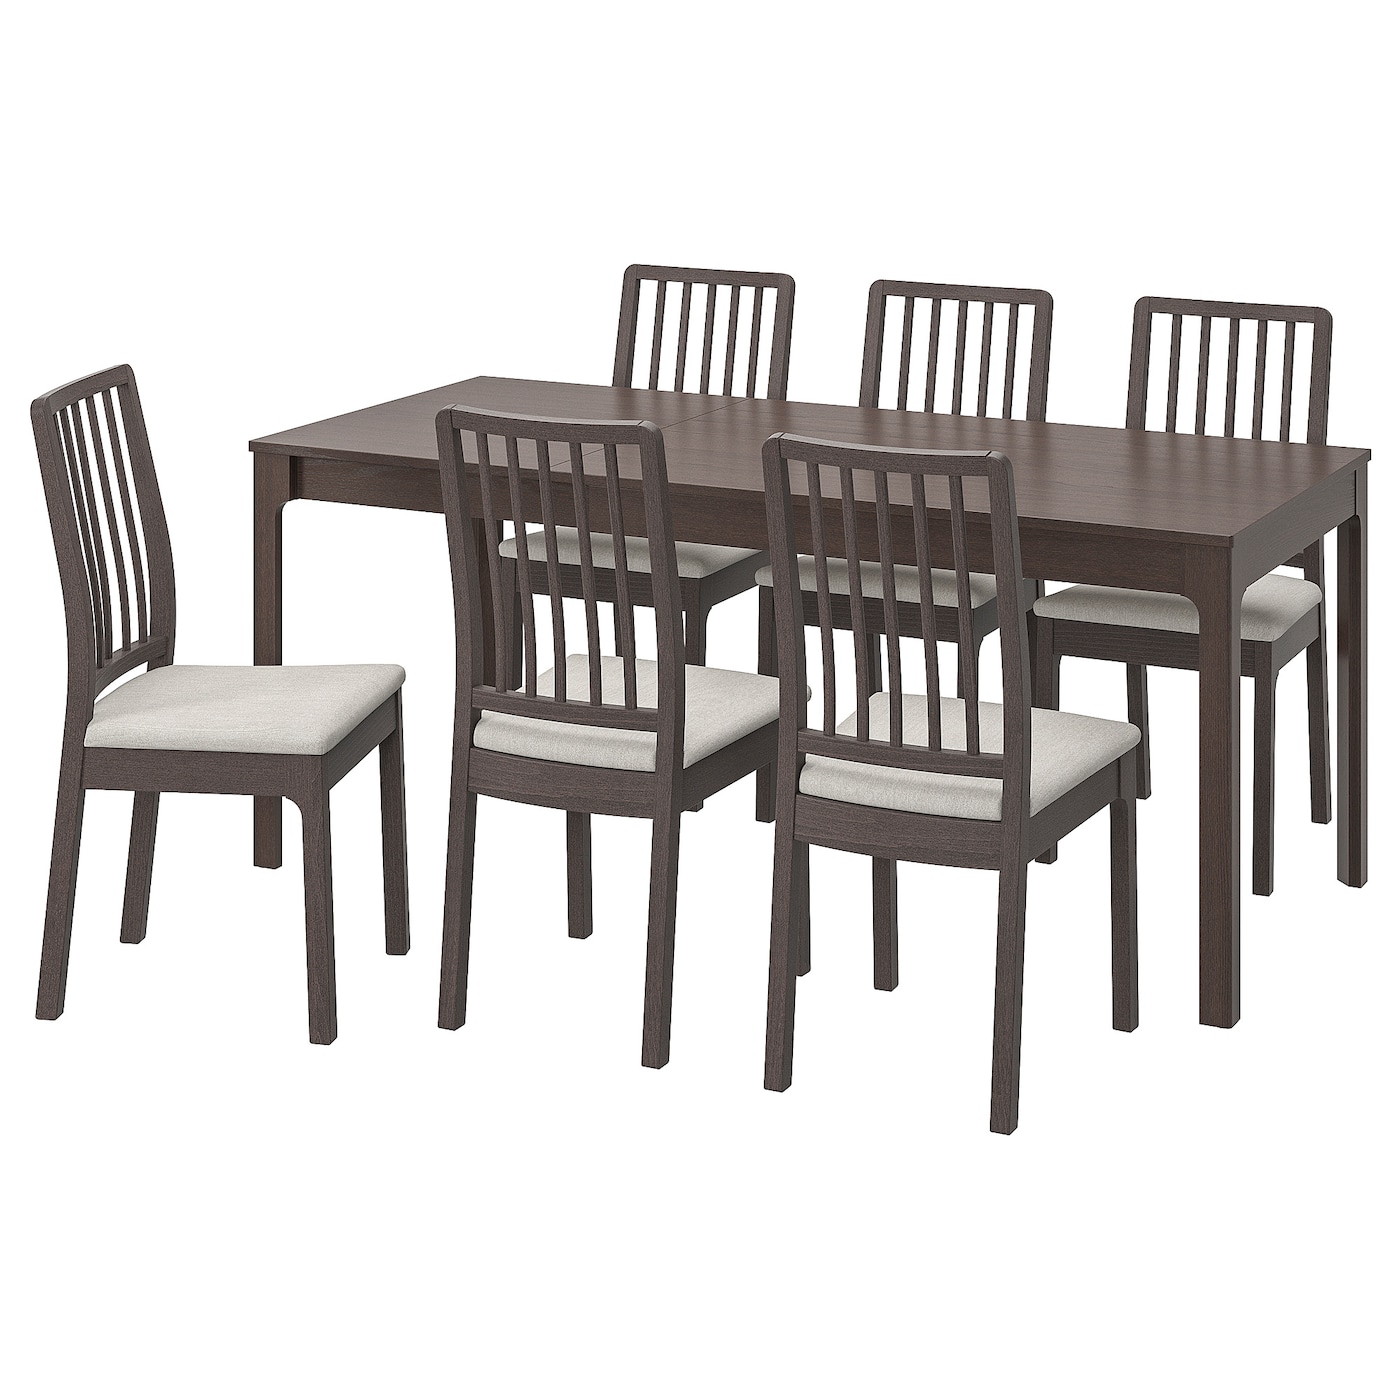 Стол и 6 стульев - IKEA EKEDALEN/ЭКЕДАЛЕН ИКЕА, 120х180х80 см, темно-коричневый/серый